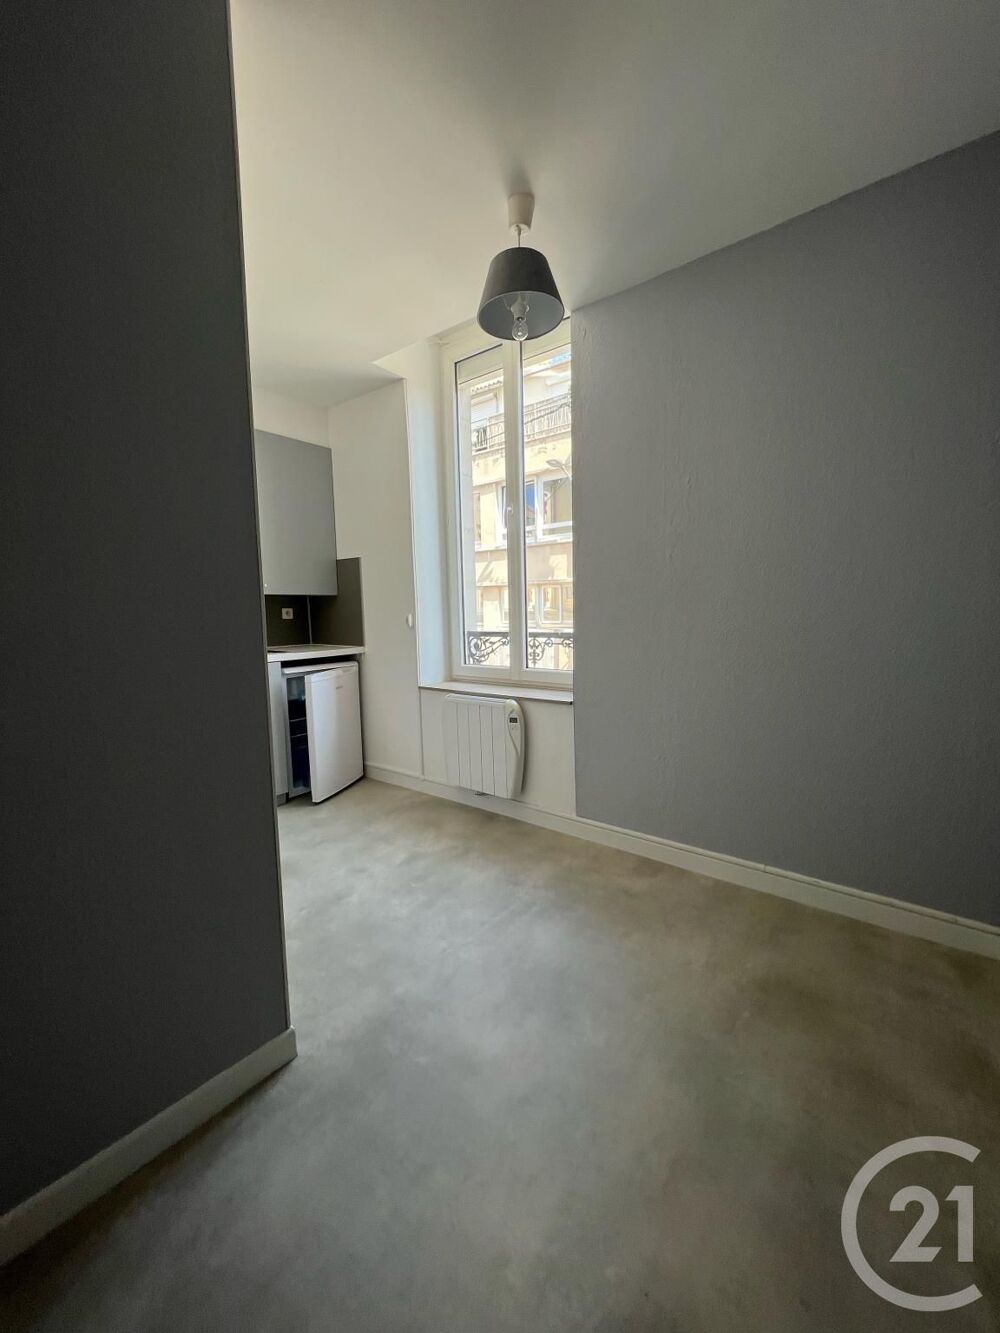 location Appartement - 1 pice(s) - 30 m Montluon (03100)